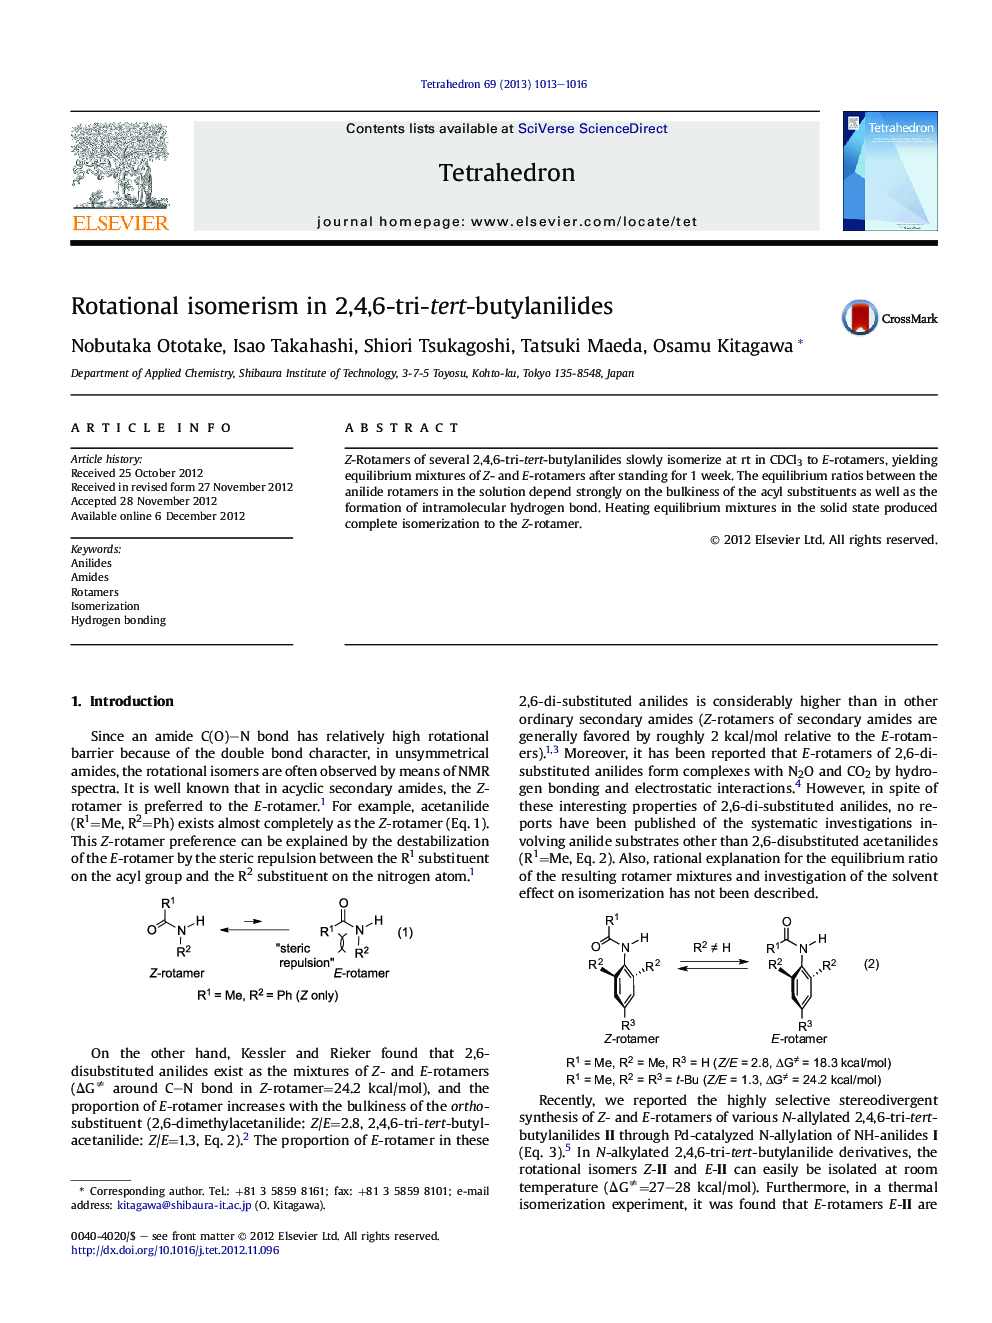 Rotational isomerism in 2,4,6-tri-tert-butylanilides